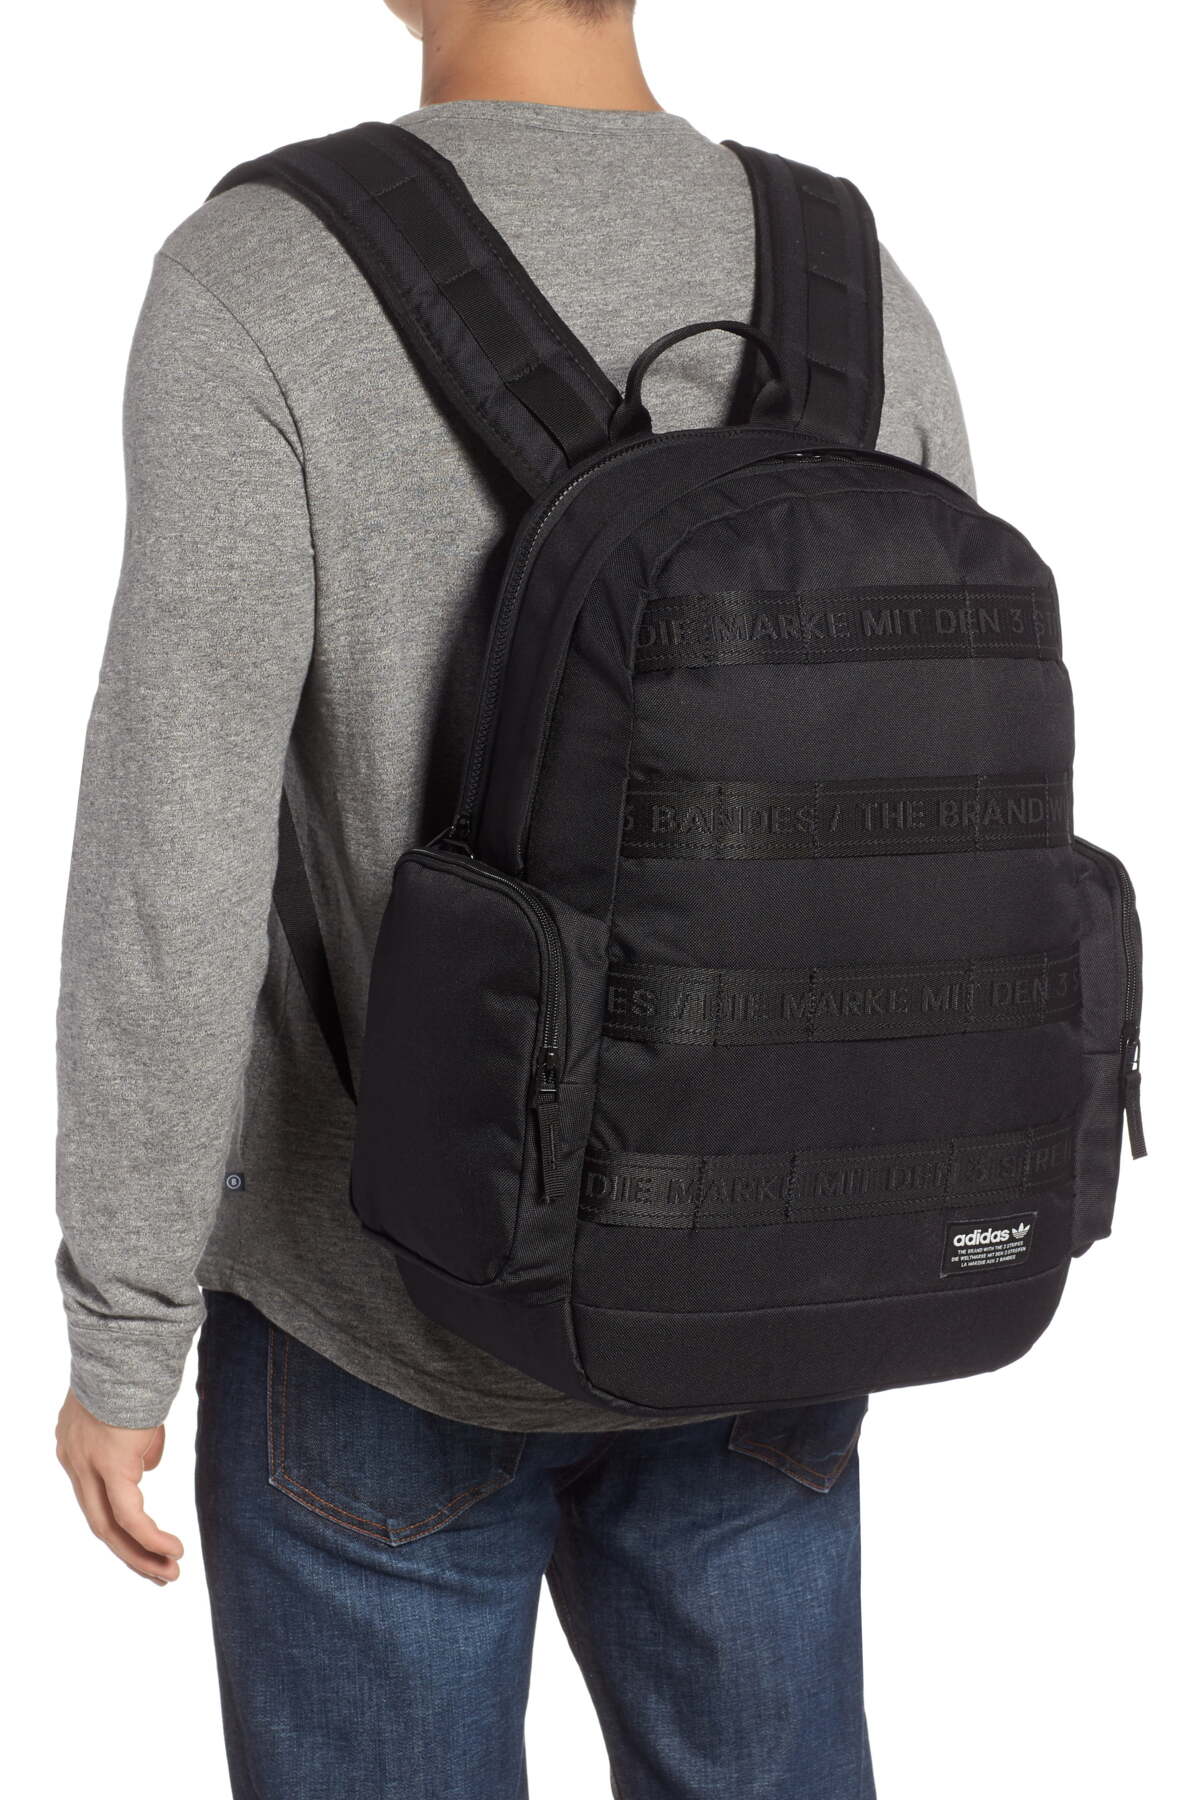 Adidas Originals Create 3 Backpack CJ6383 Adidas